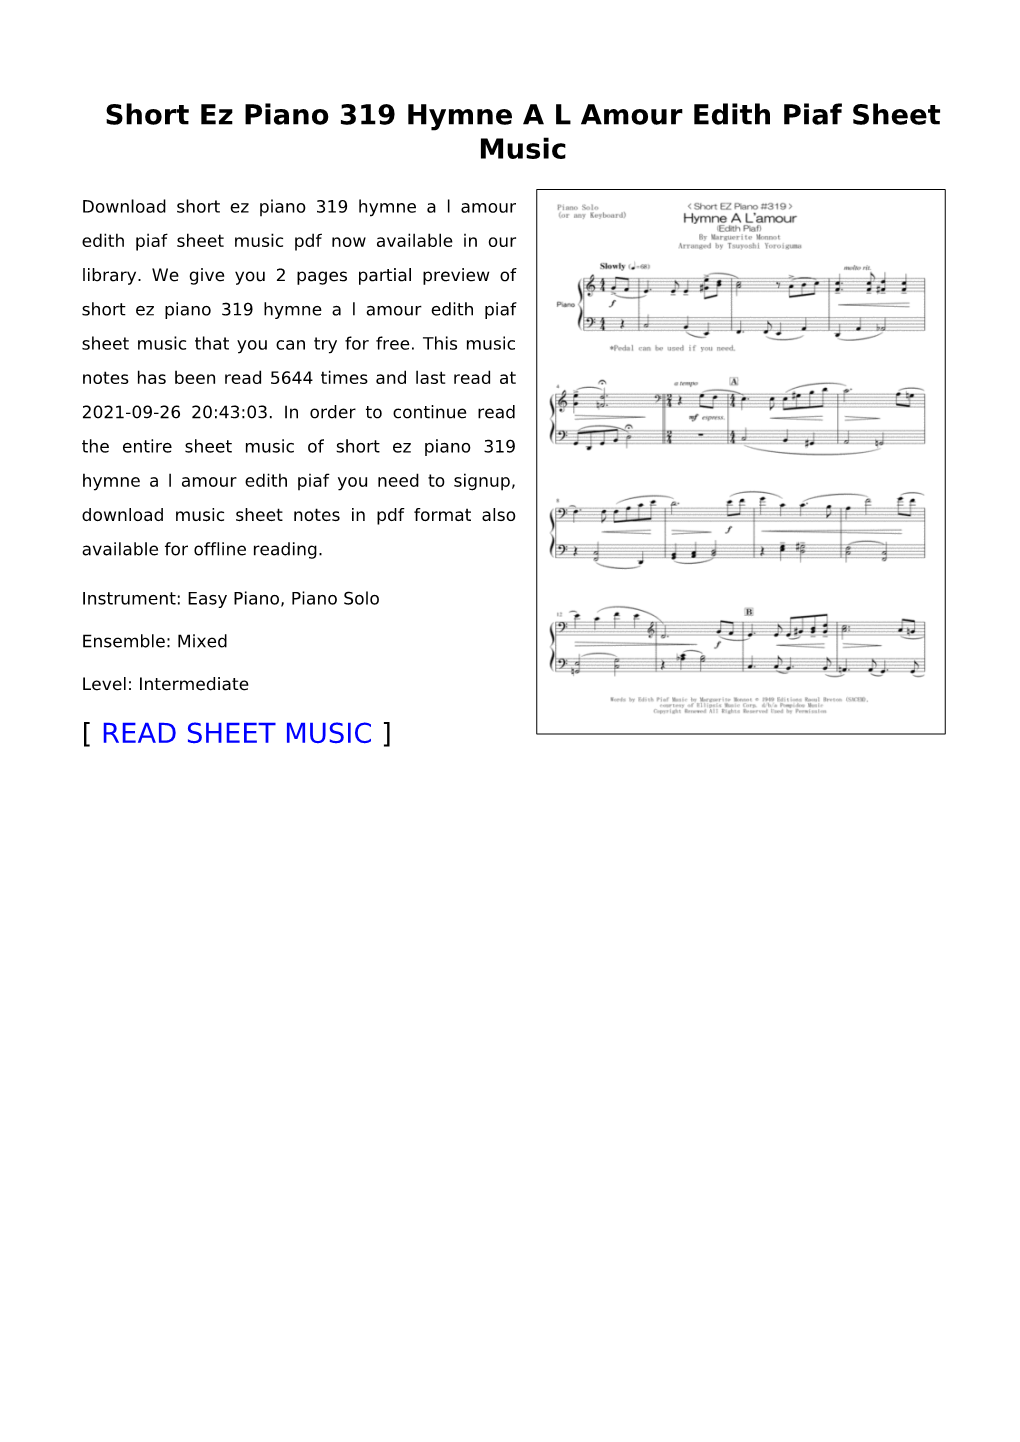 Short Ez Piano 319 Hymne a L Amour Edith Piaf Sheet Music